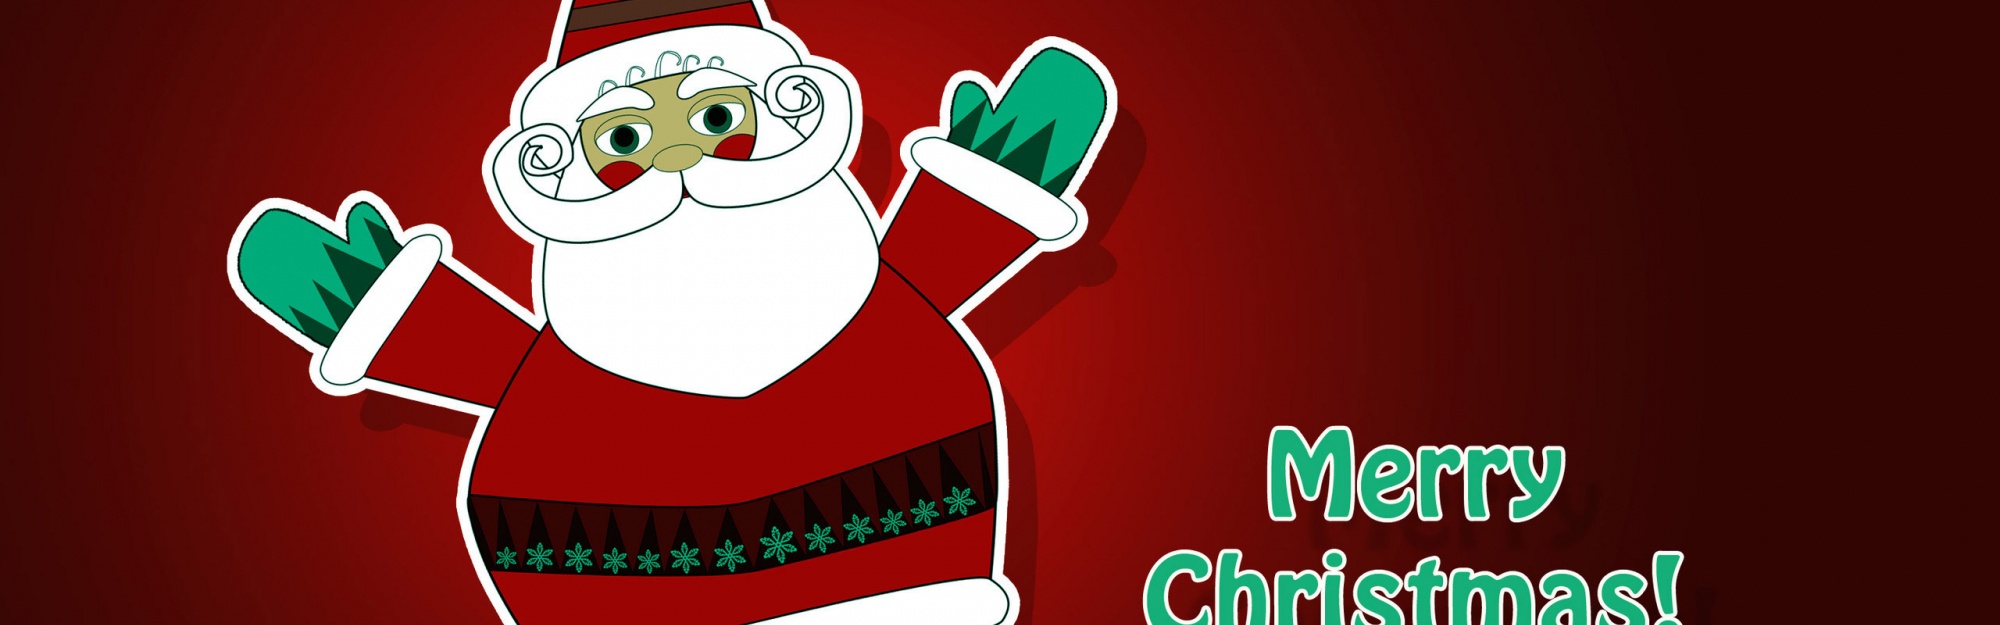 Christmas - Santa Claus